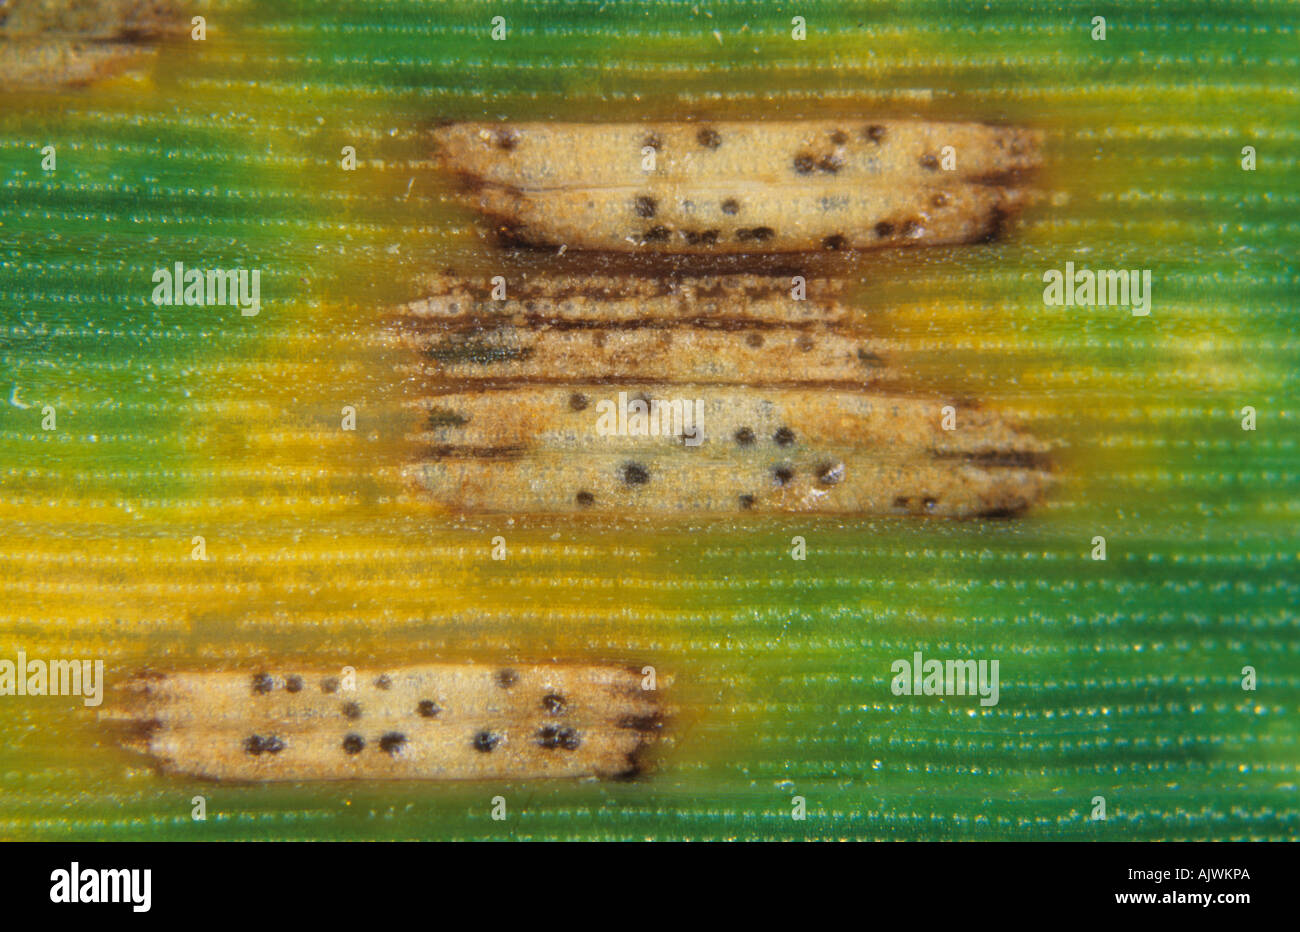 Septoria leaf spot Zymoseptoria tritici lesions and pycnidia on wheat leaf Stock Photo